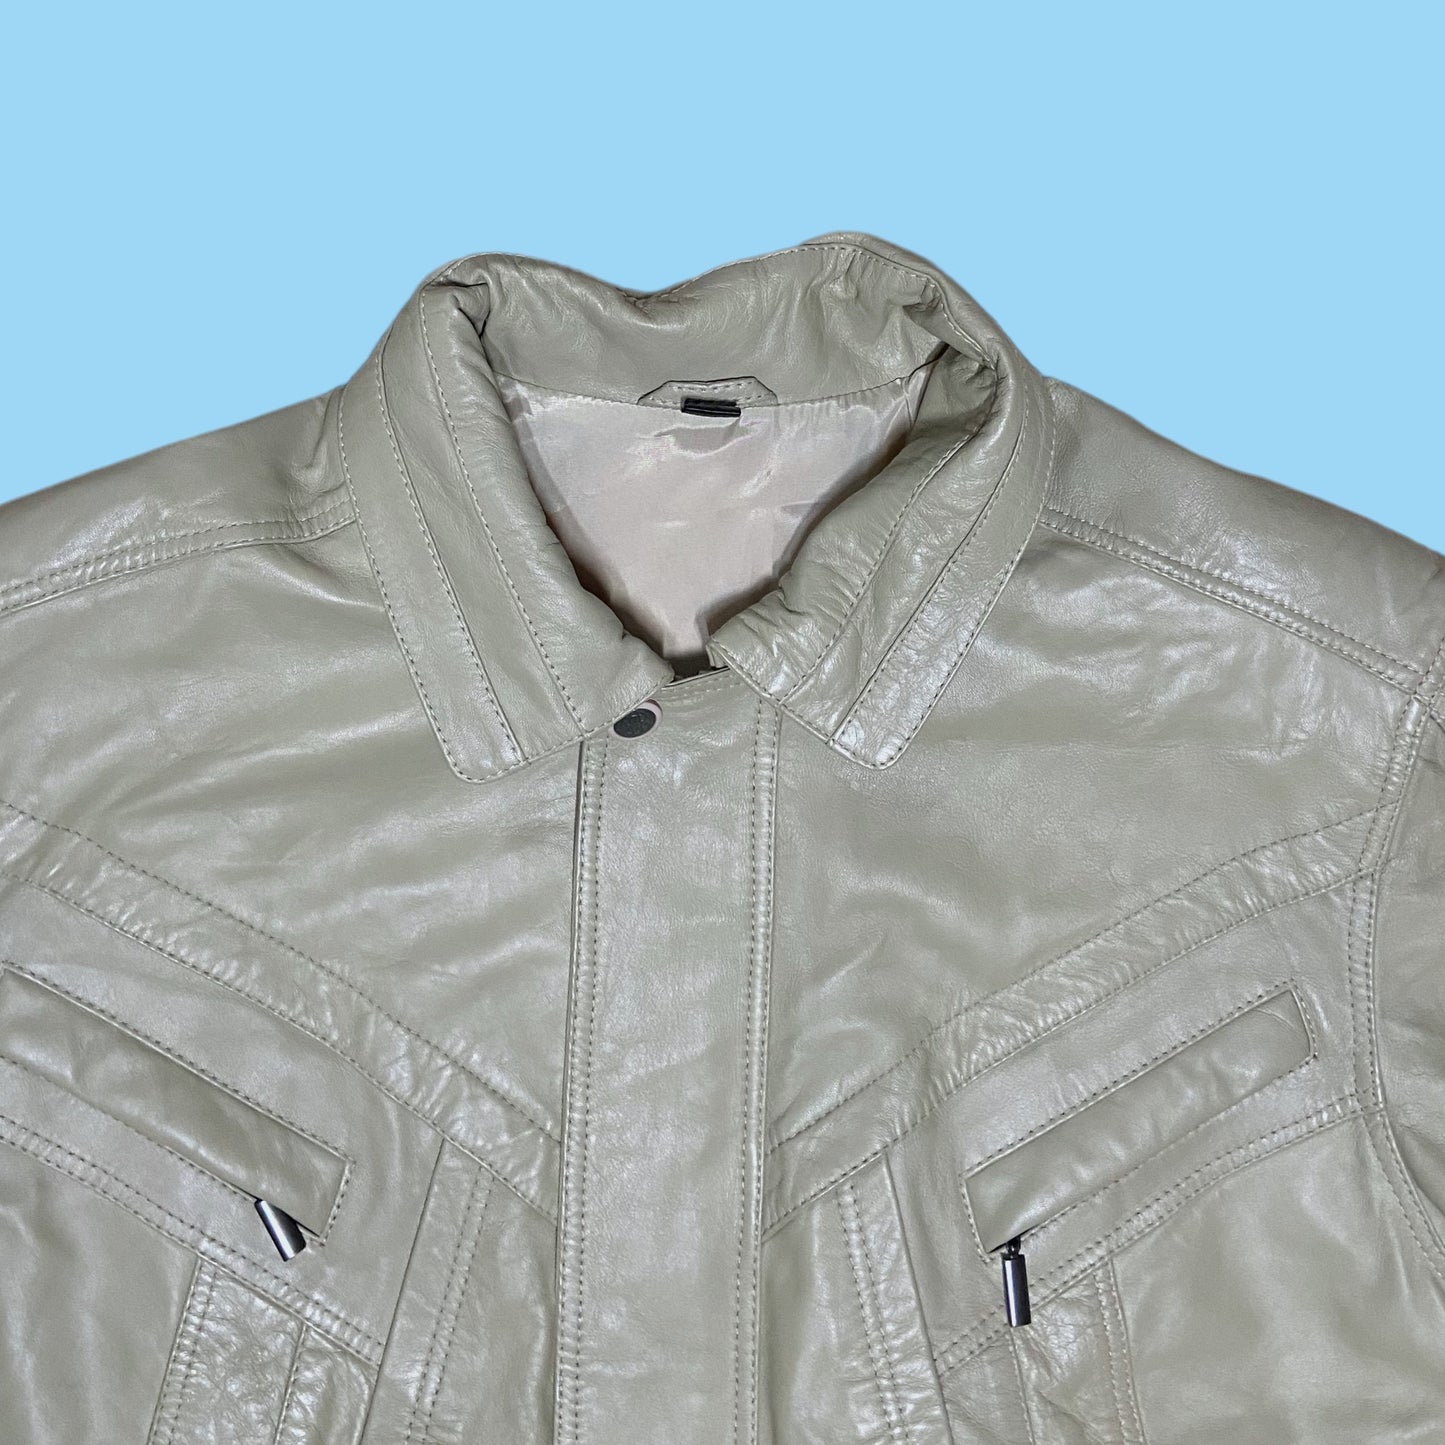 Vintage leather jacket - XL